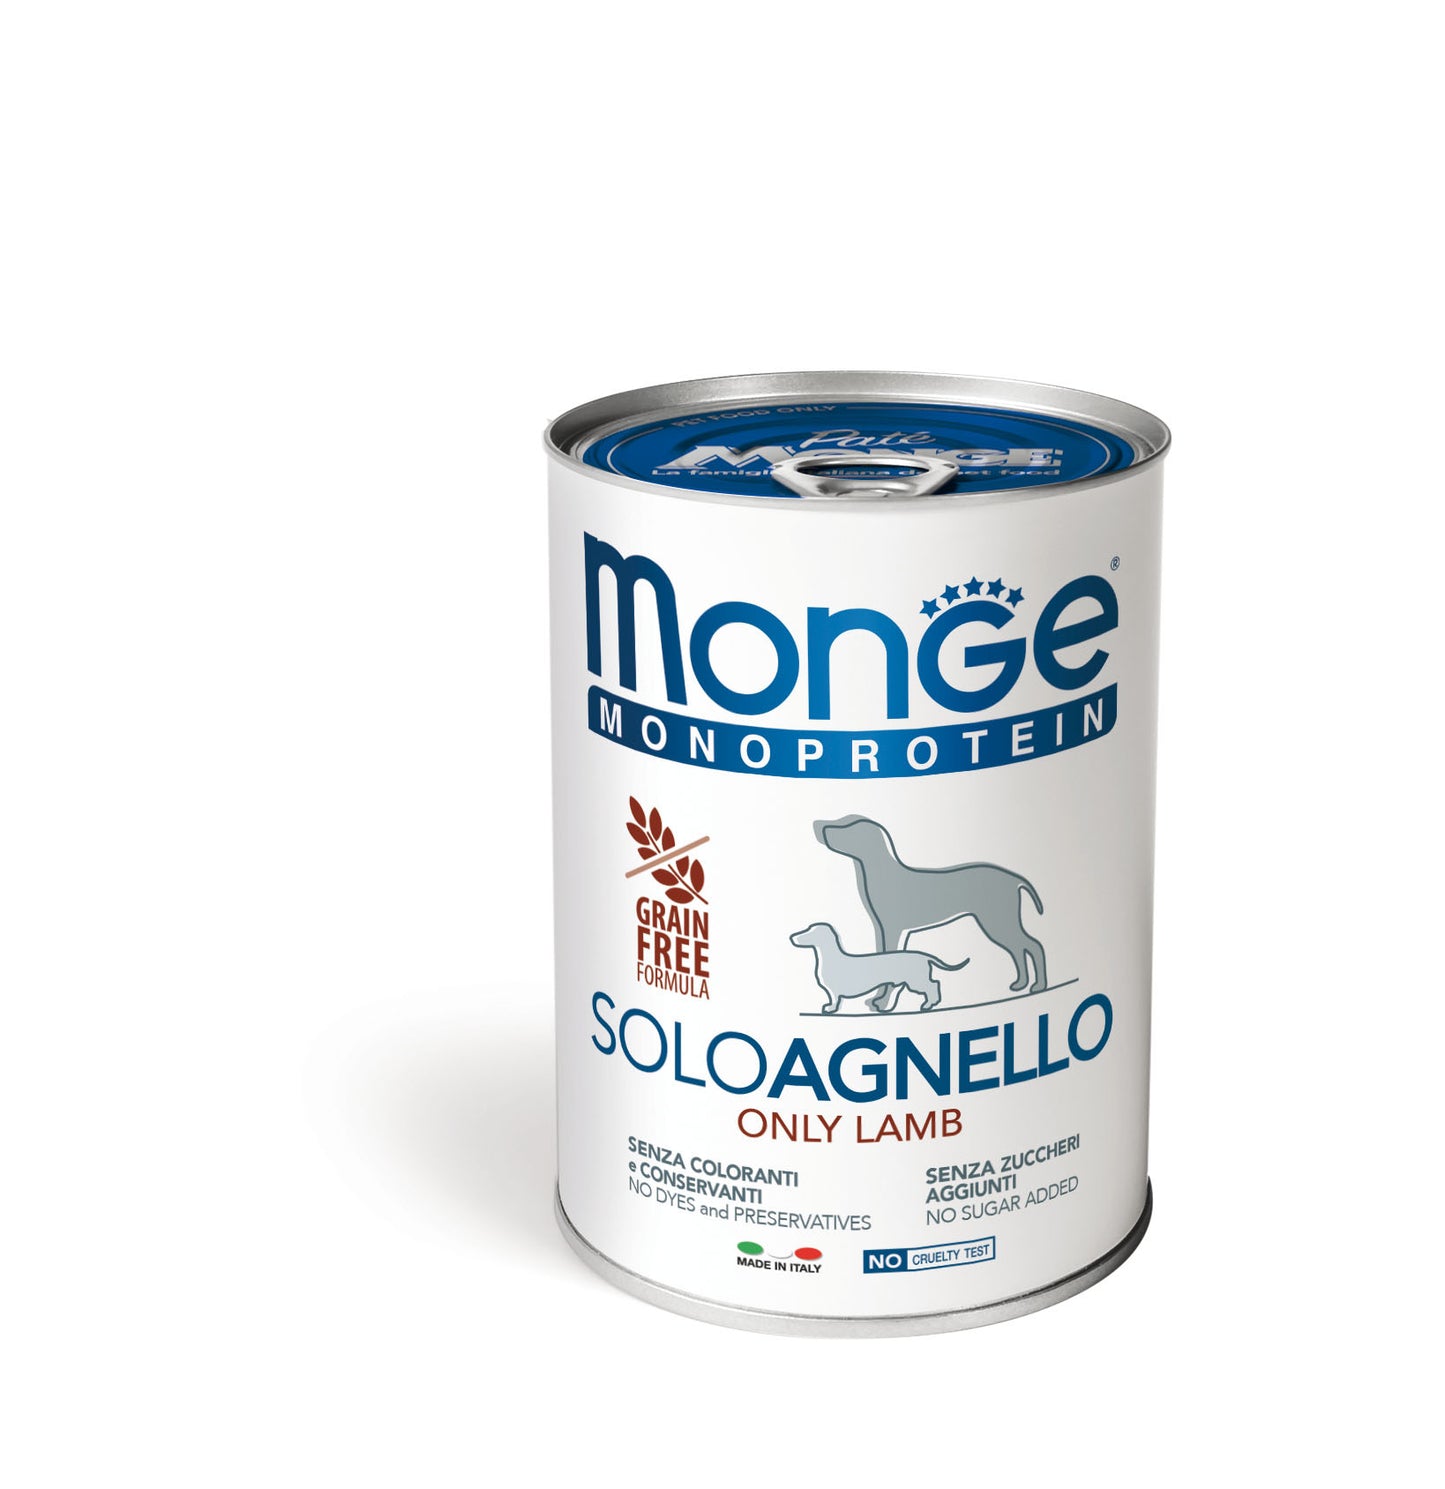 Monge Dog - GRAIN FREE - Monoprotein - Paté Lamb